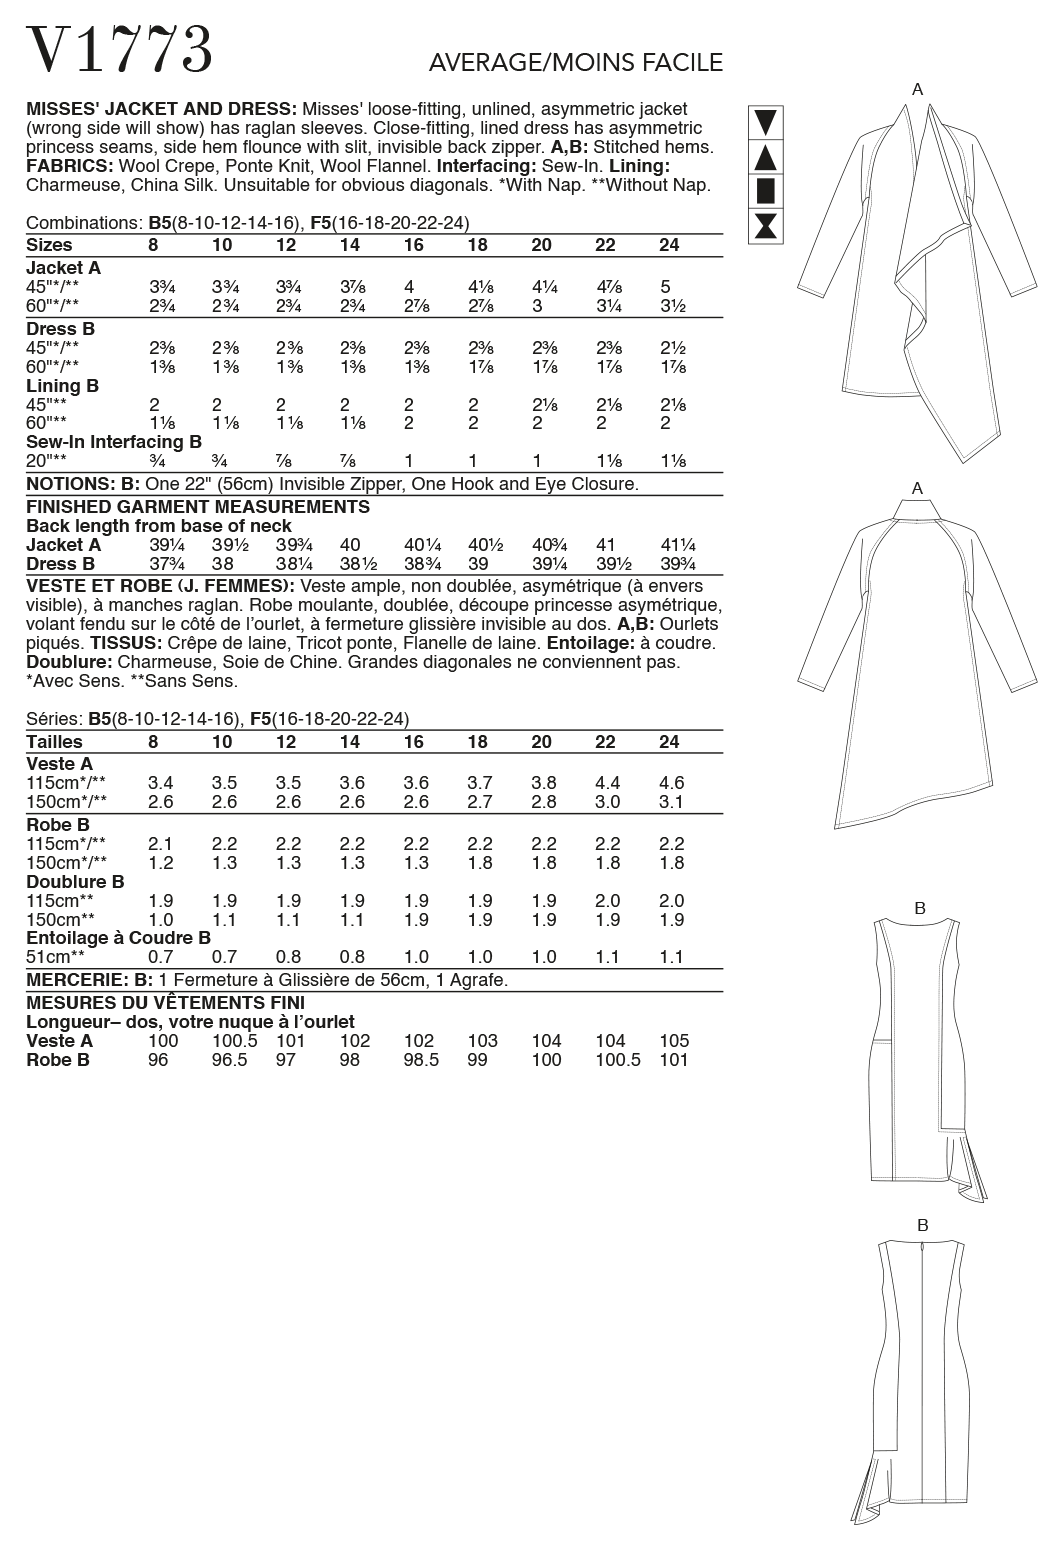 Vogue Patterns 1773 Misses' Jacket & Dress